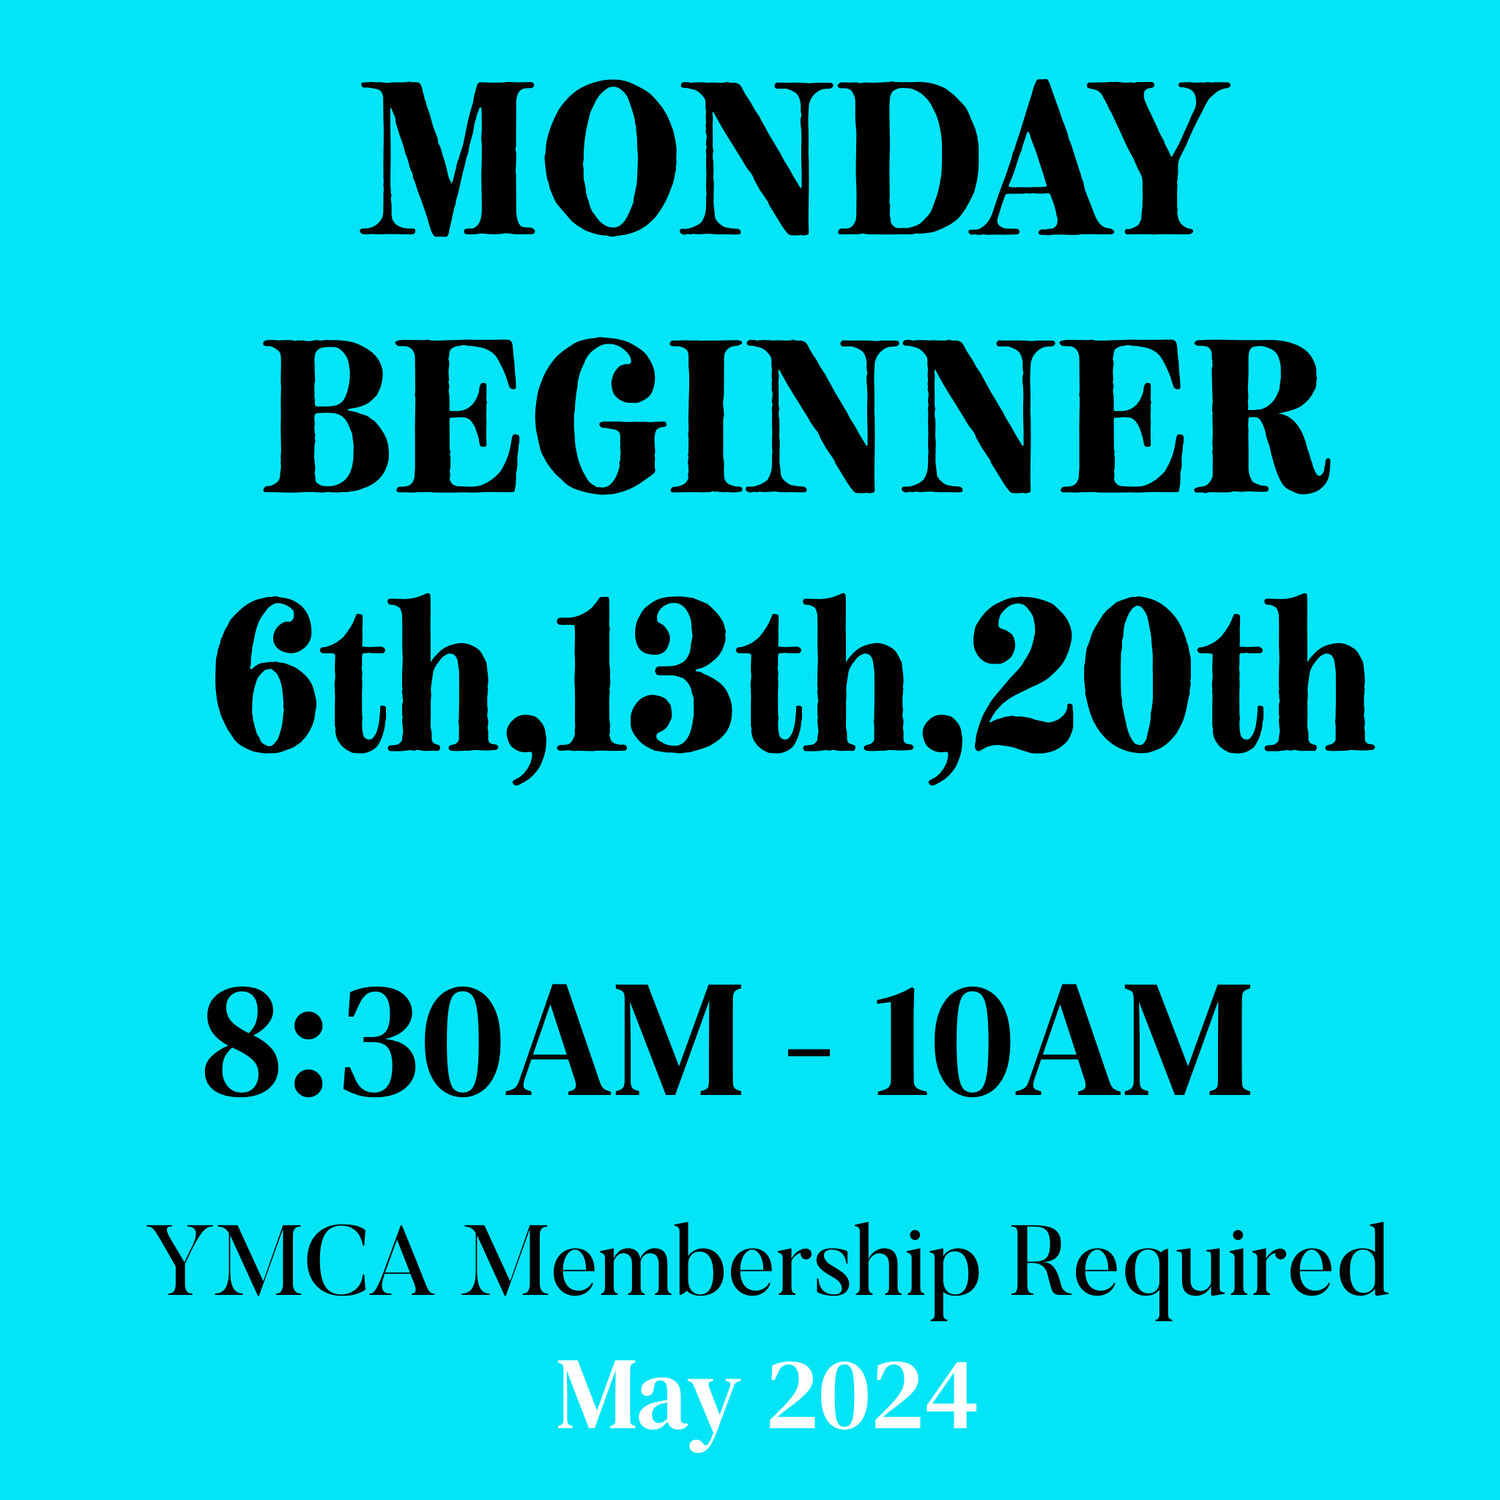 Beginner / Monday / May. - 6,13,20 8:30AM - 10AM (3weeks)